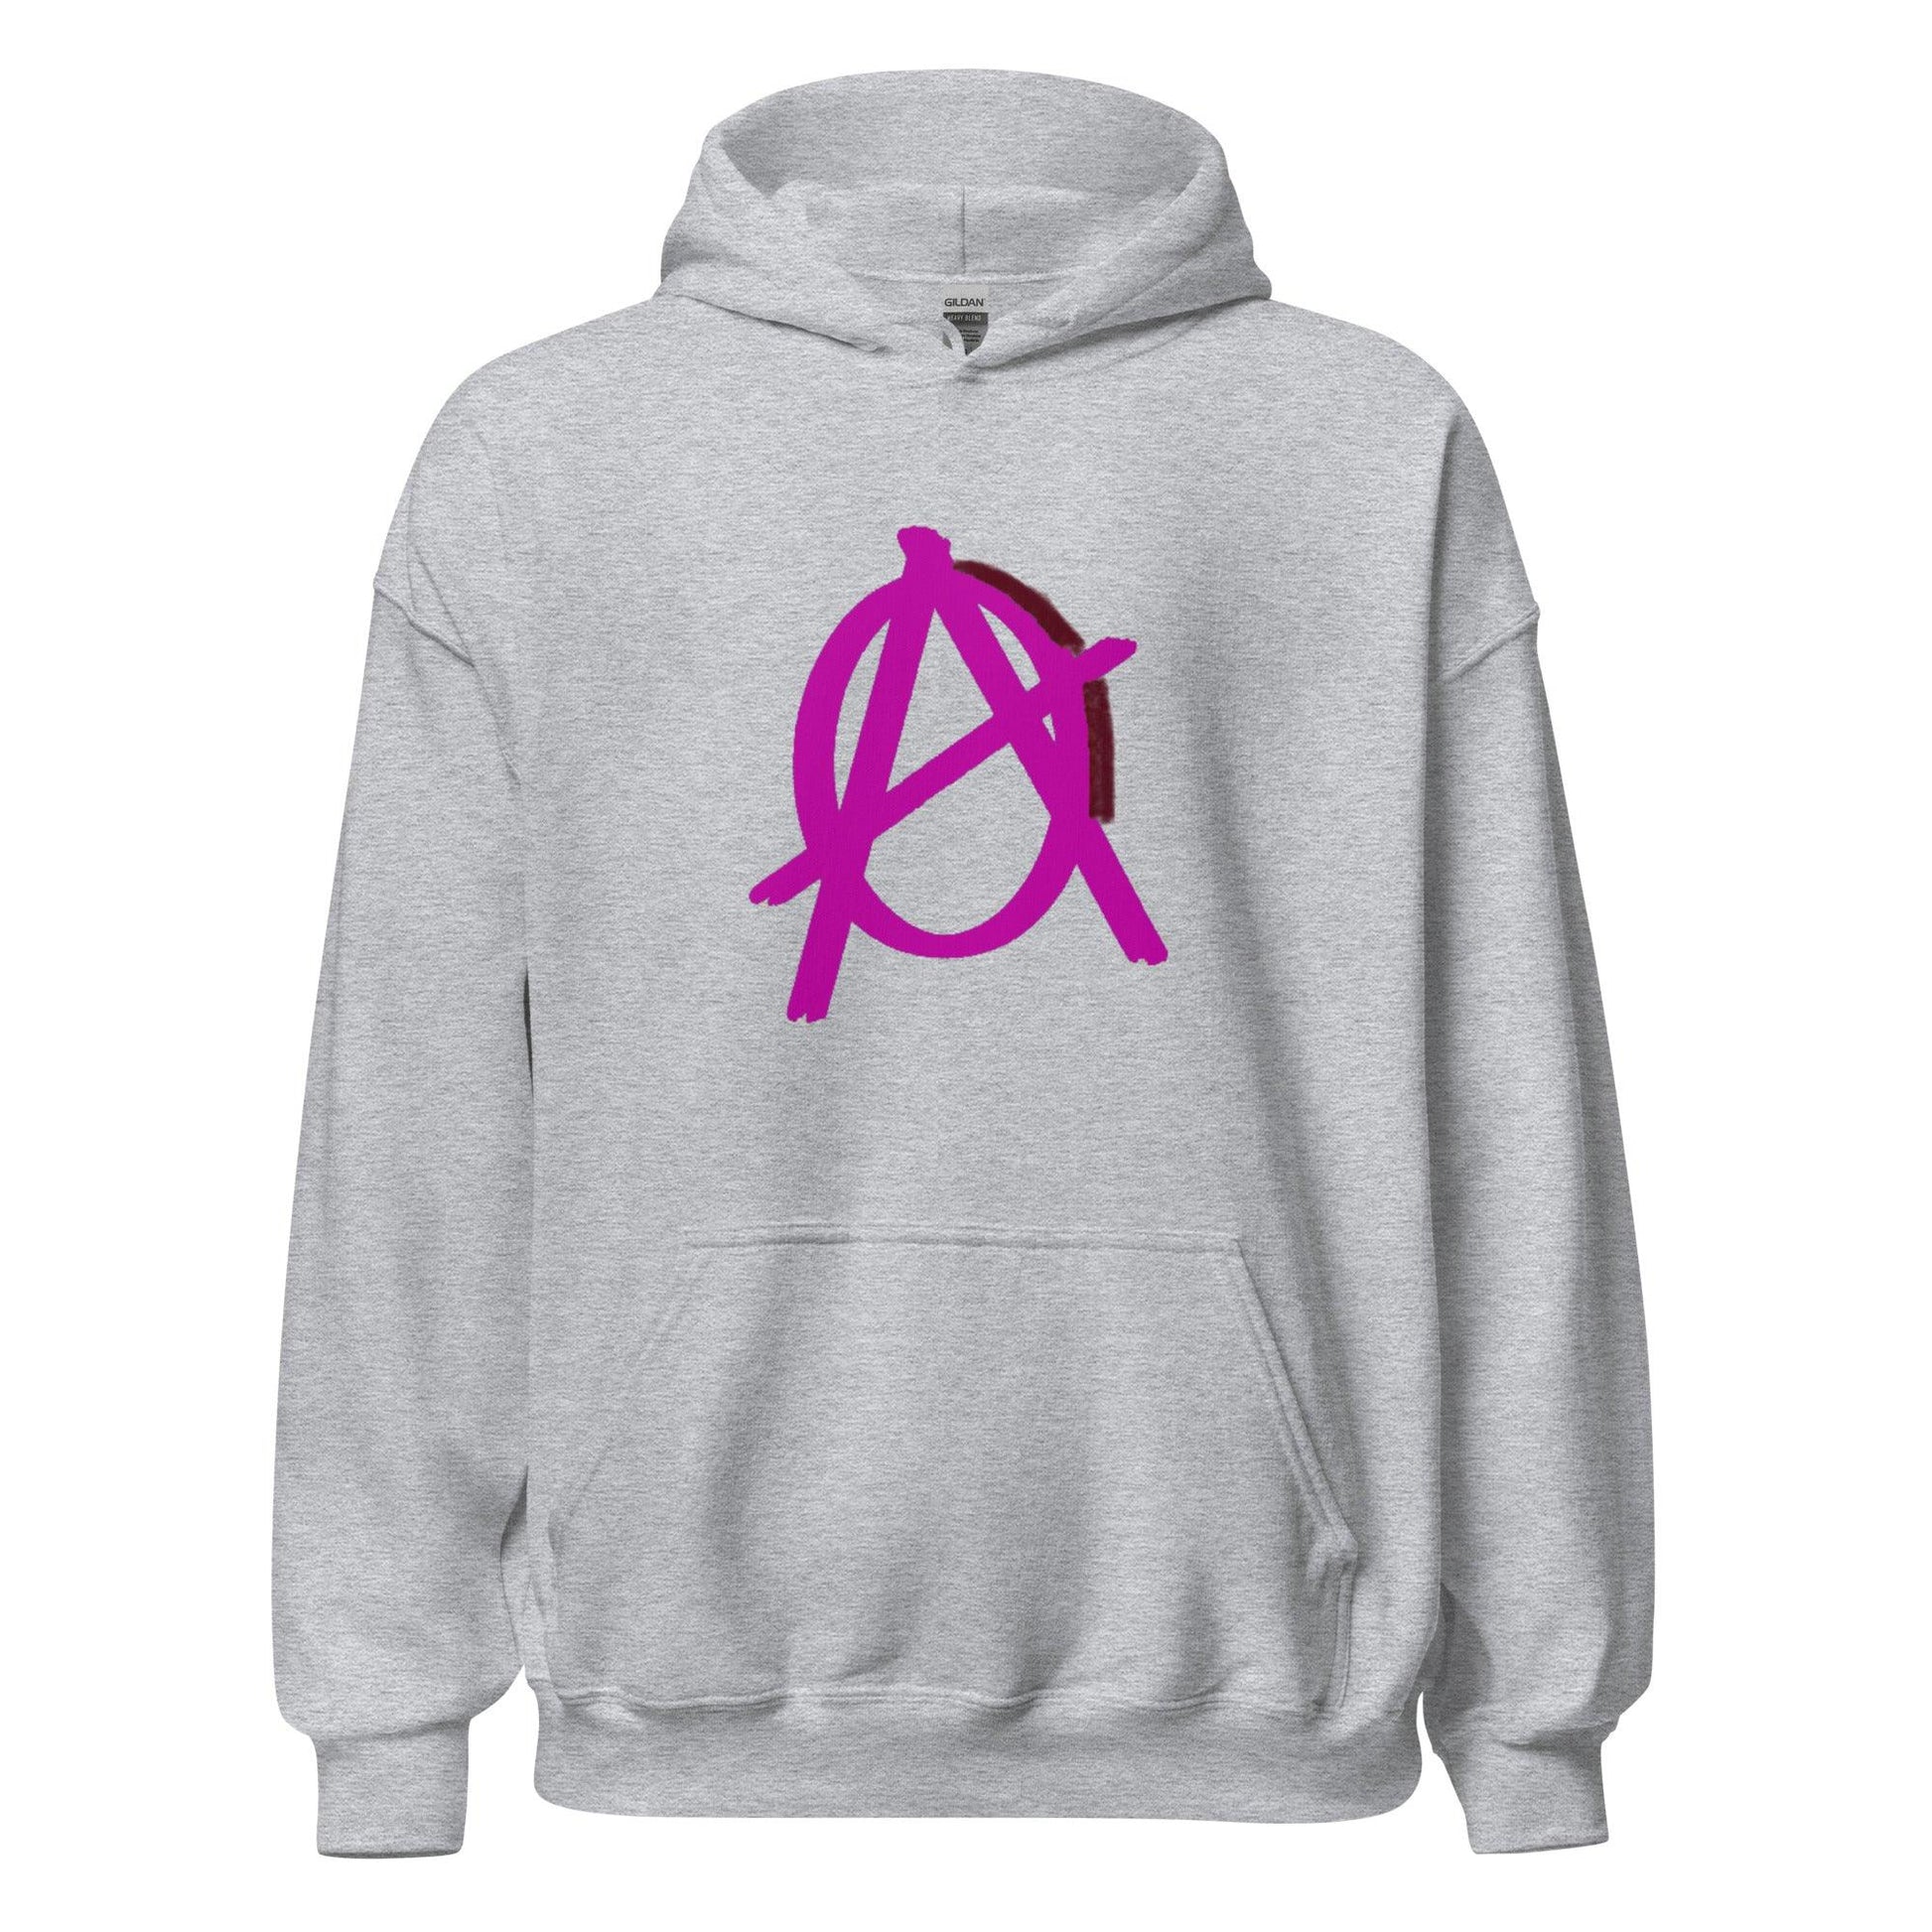 Anarchy Wear Pink Hoodie - AnarchyWear